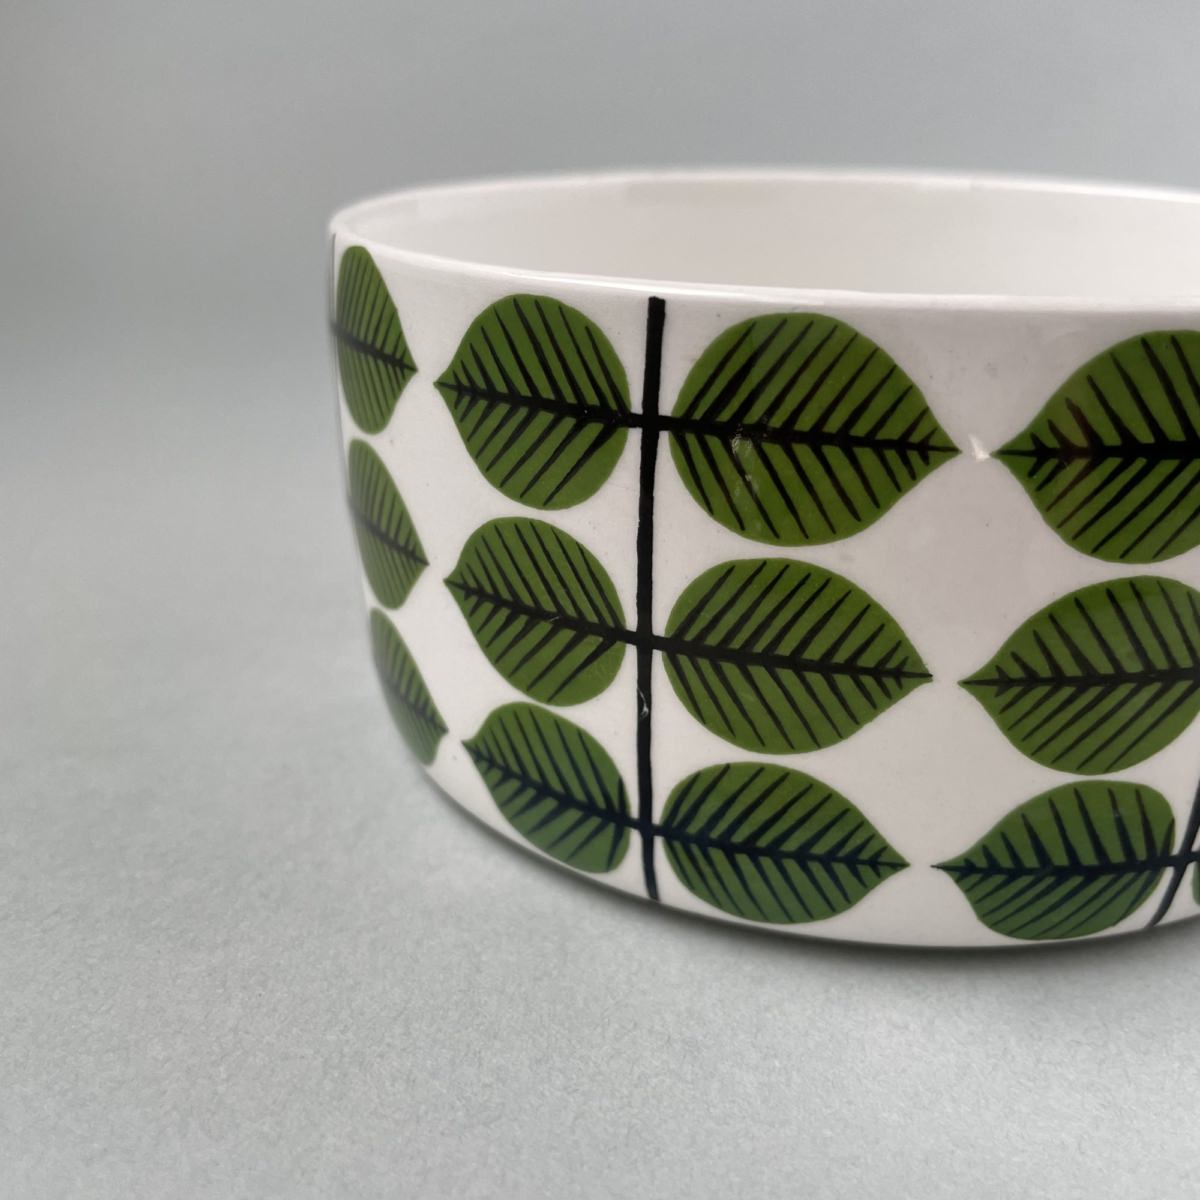 OthersGUSTAVSBERG Stig Lindberg / Bohus Bersa Vintage Ceramic Bowl & Wooden Lid